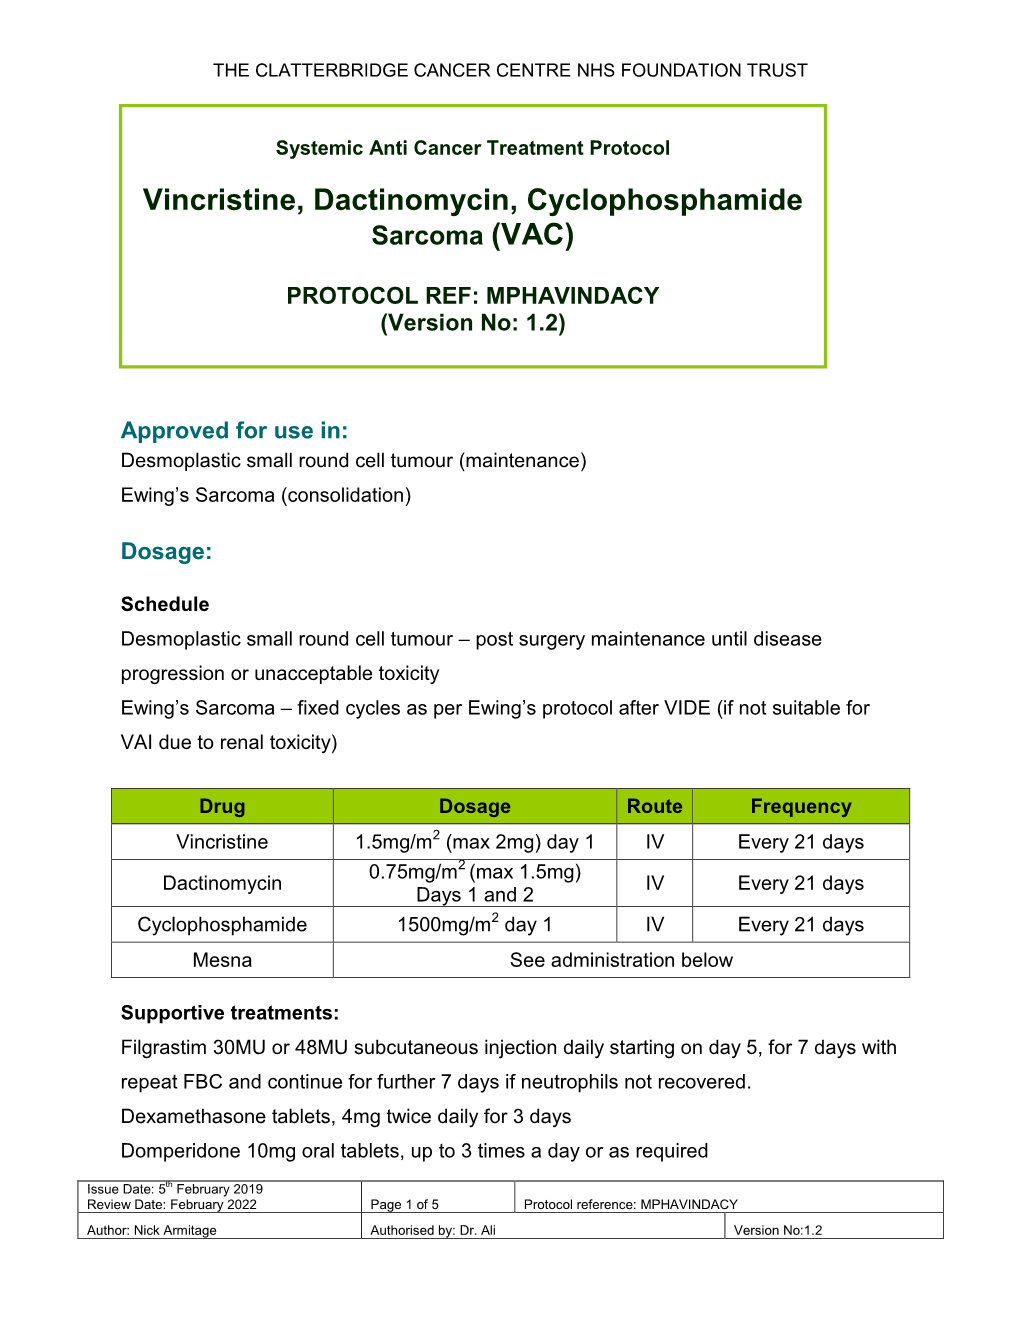 Vincristine, Dactinomycin, Cyclophosphamide